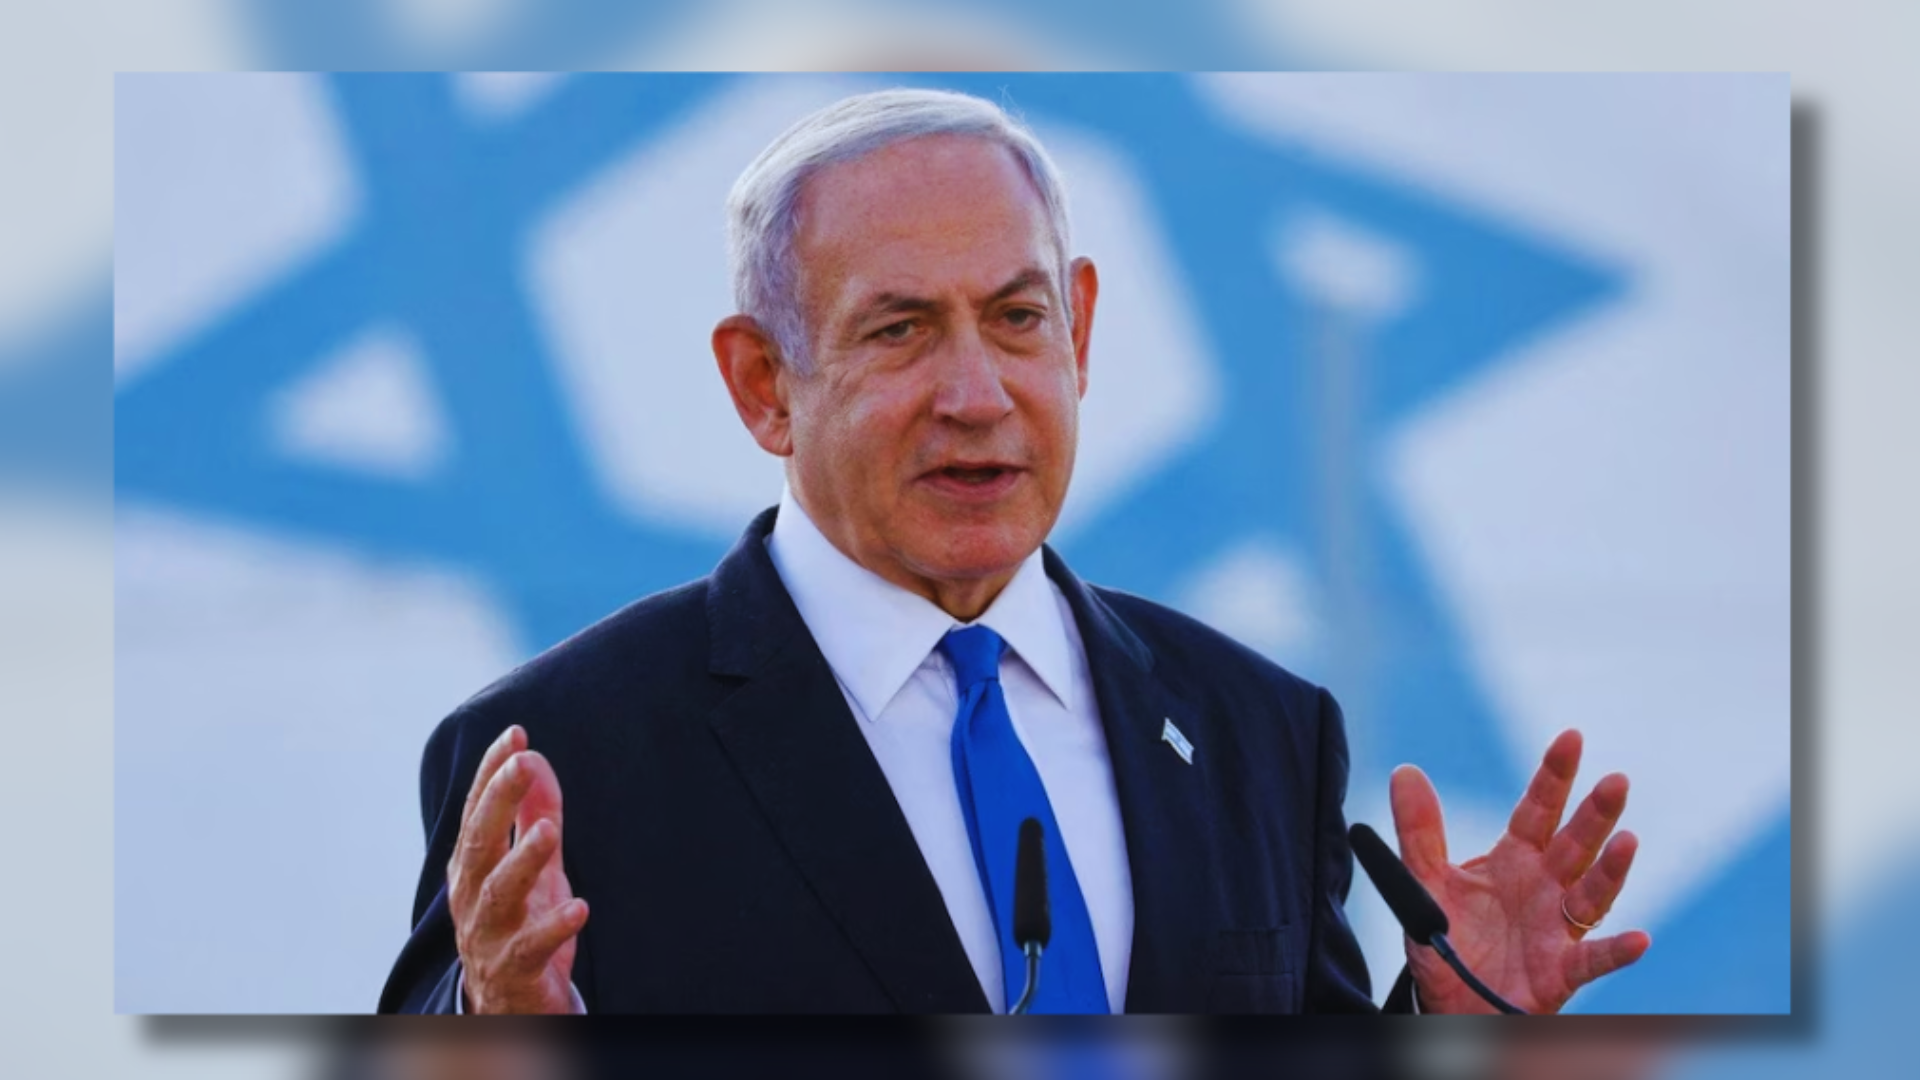 Netanyahu Admits “Tragic Mistake” In Rafah Strike, International Criticism Rises